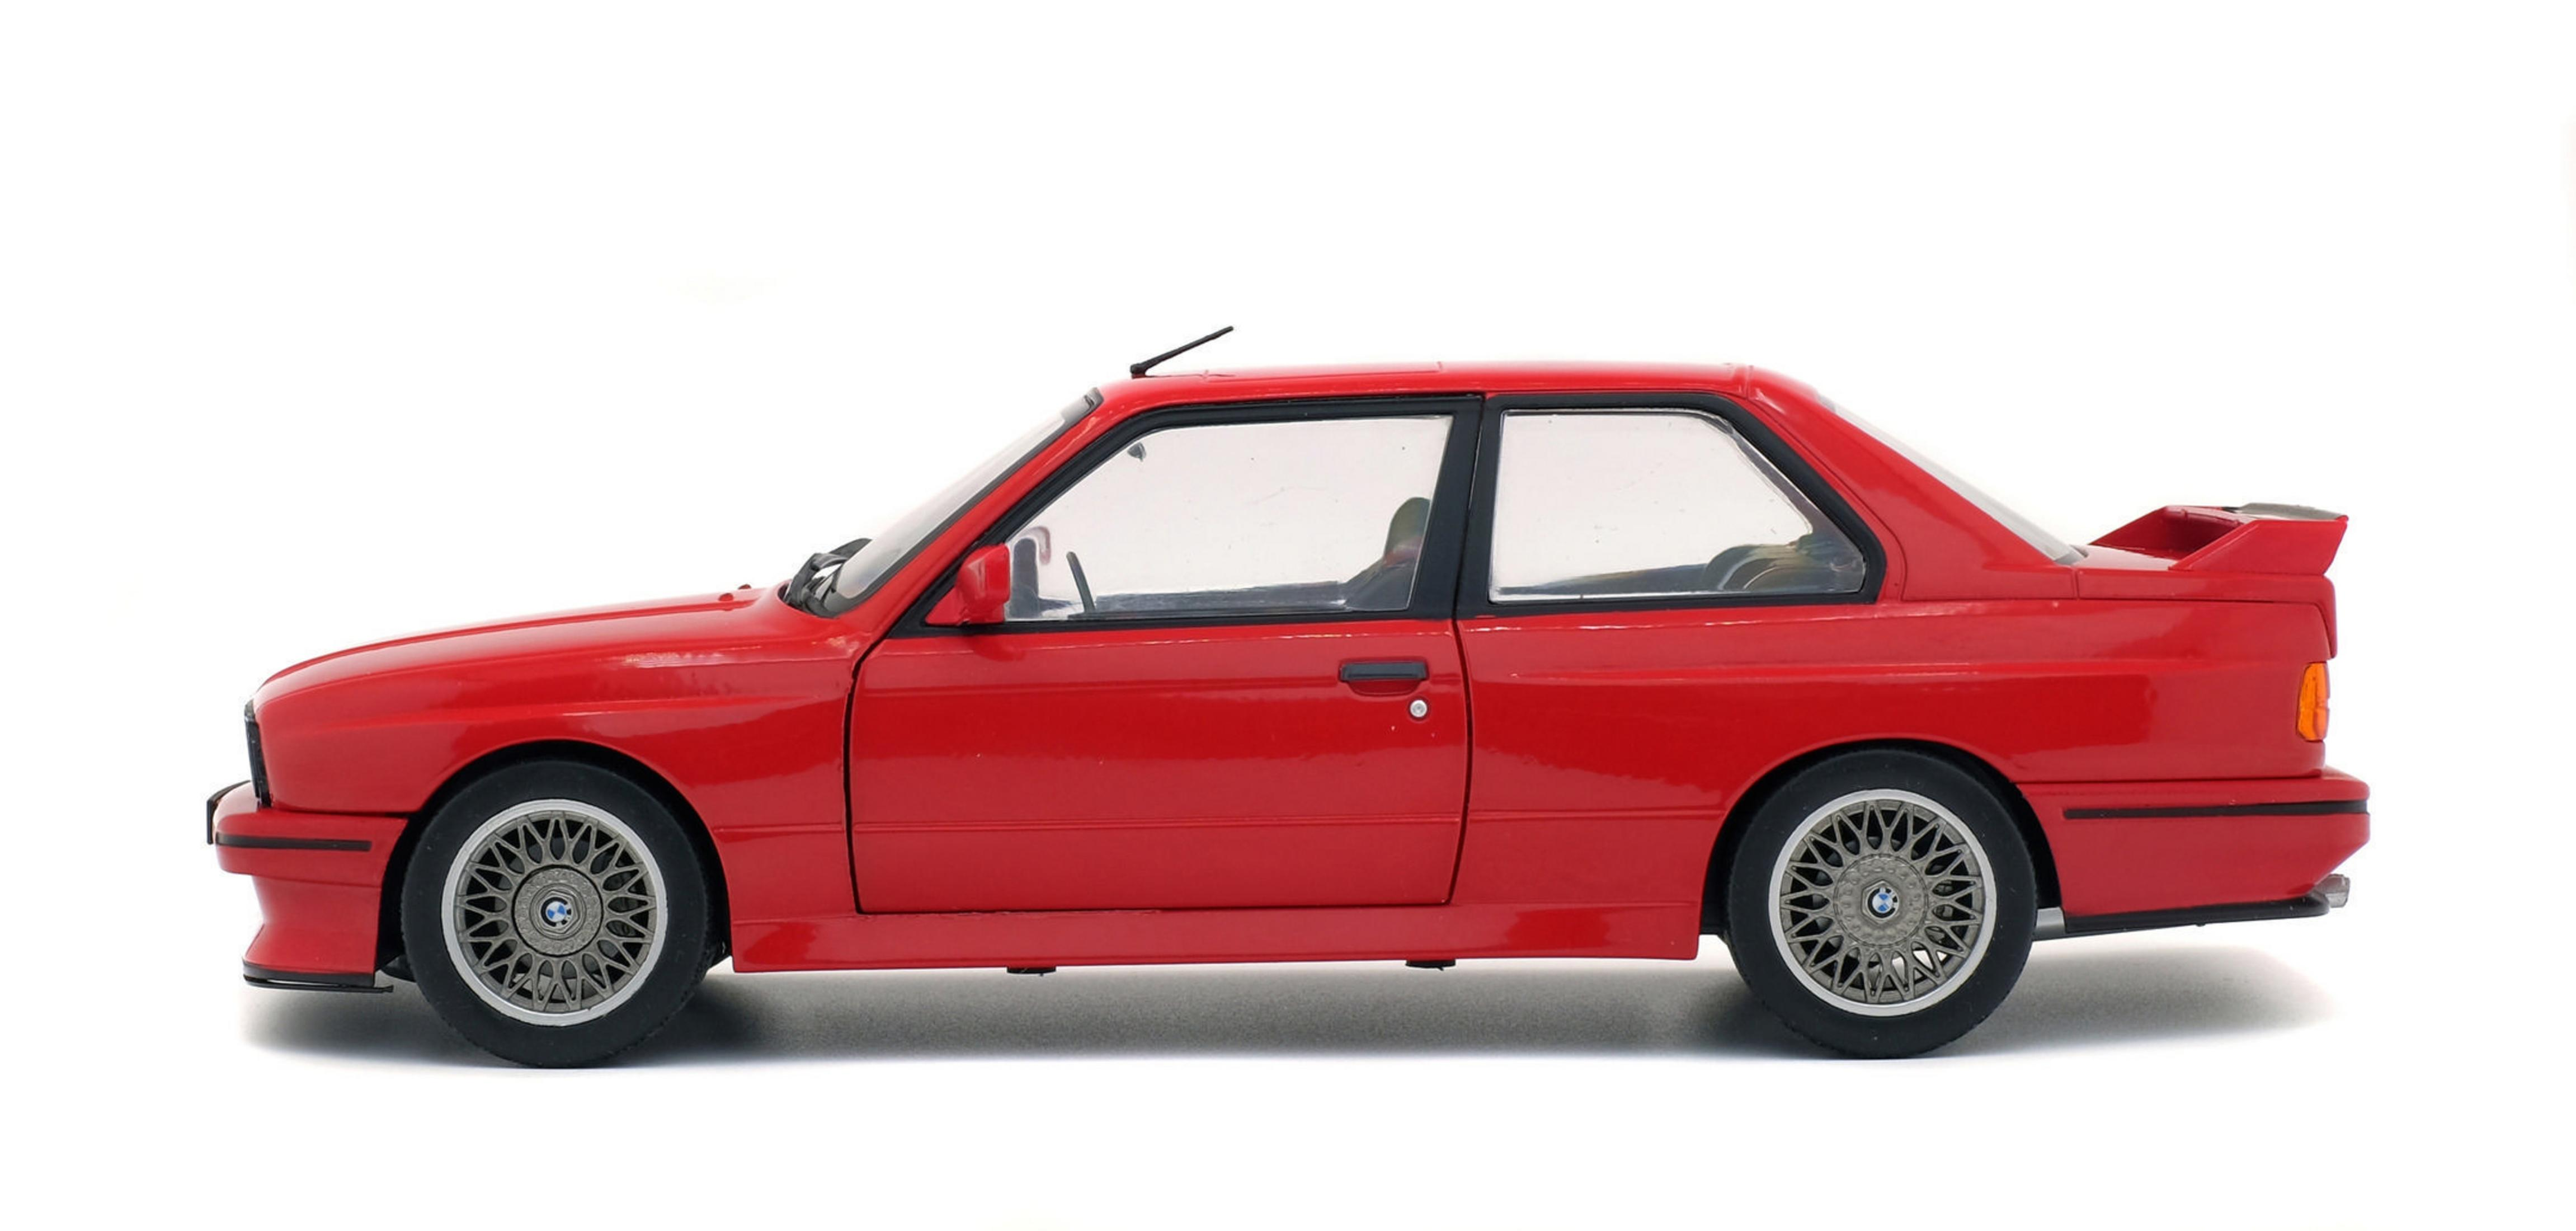 Rot (1986) 1:18 SOLIDO BMW 421184390 Spielzeugmodellauto M3